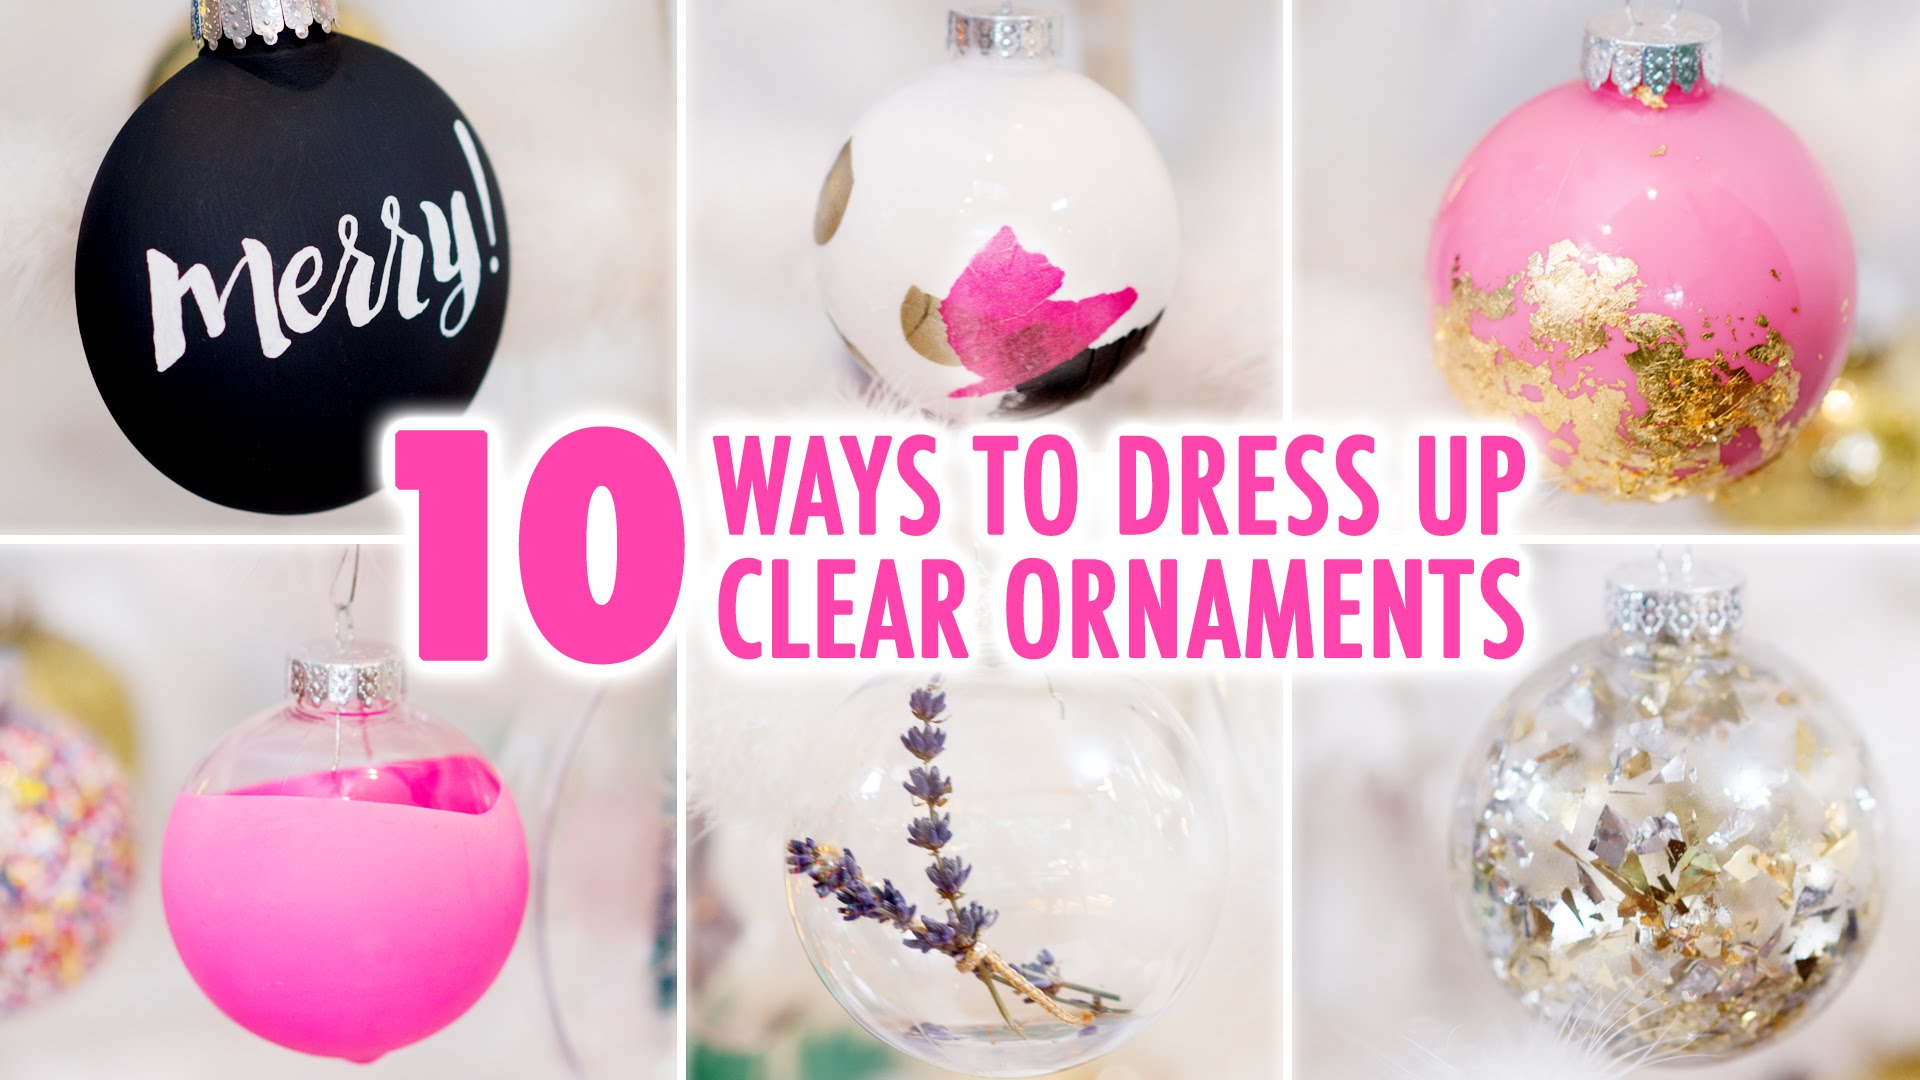 10 Ways To DIY a Clear Ornament - HGTV Handmade - YouTube